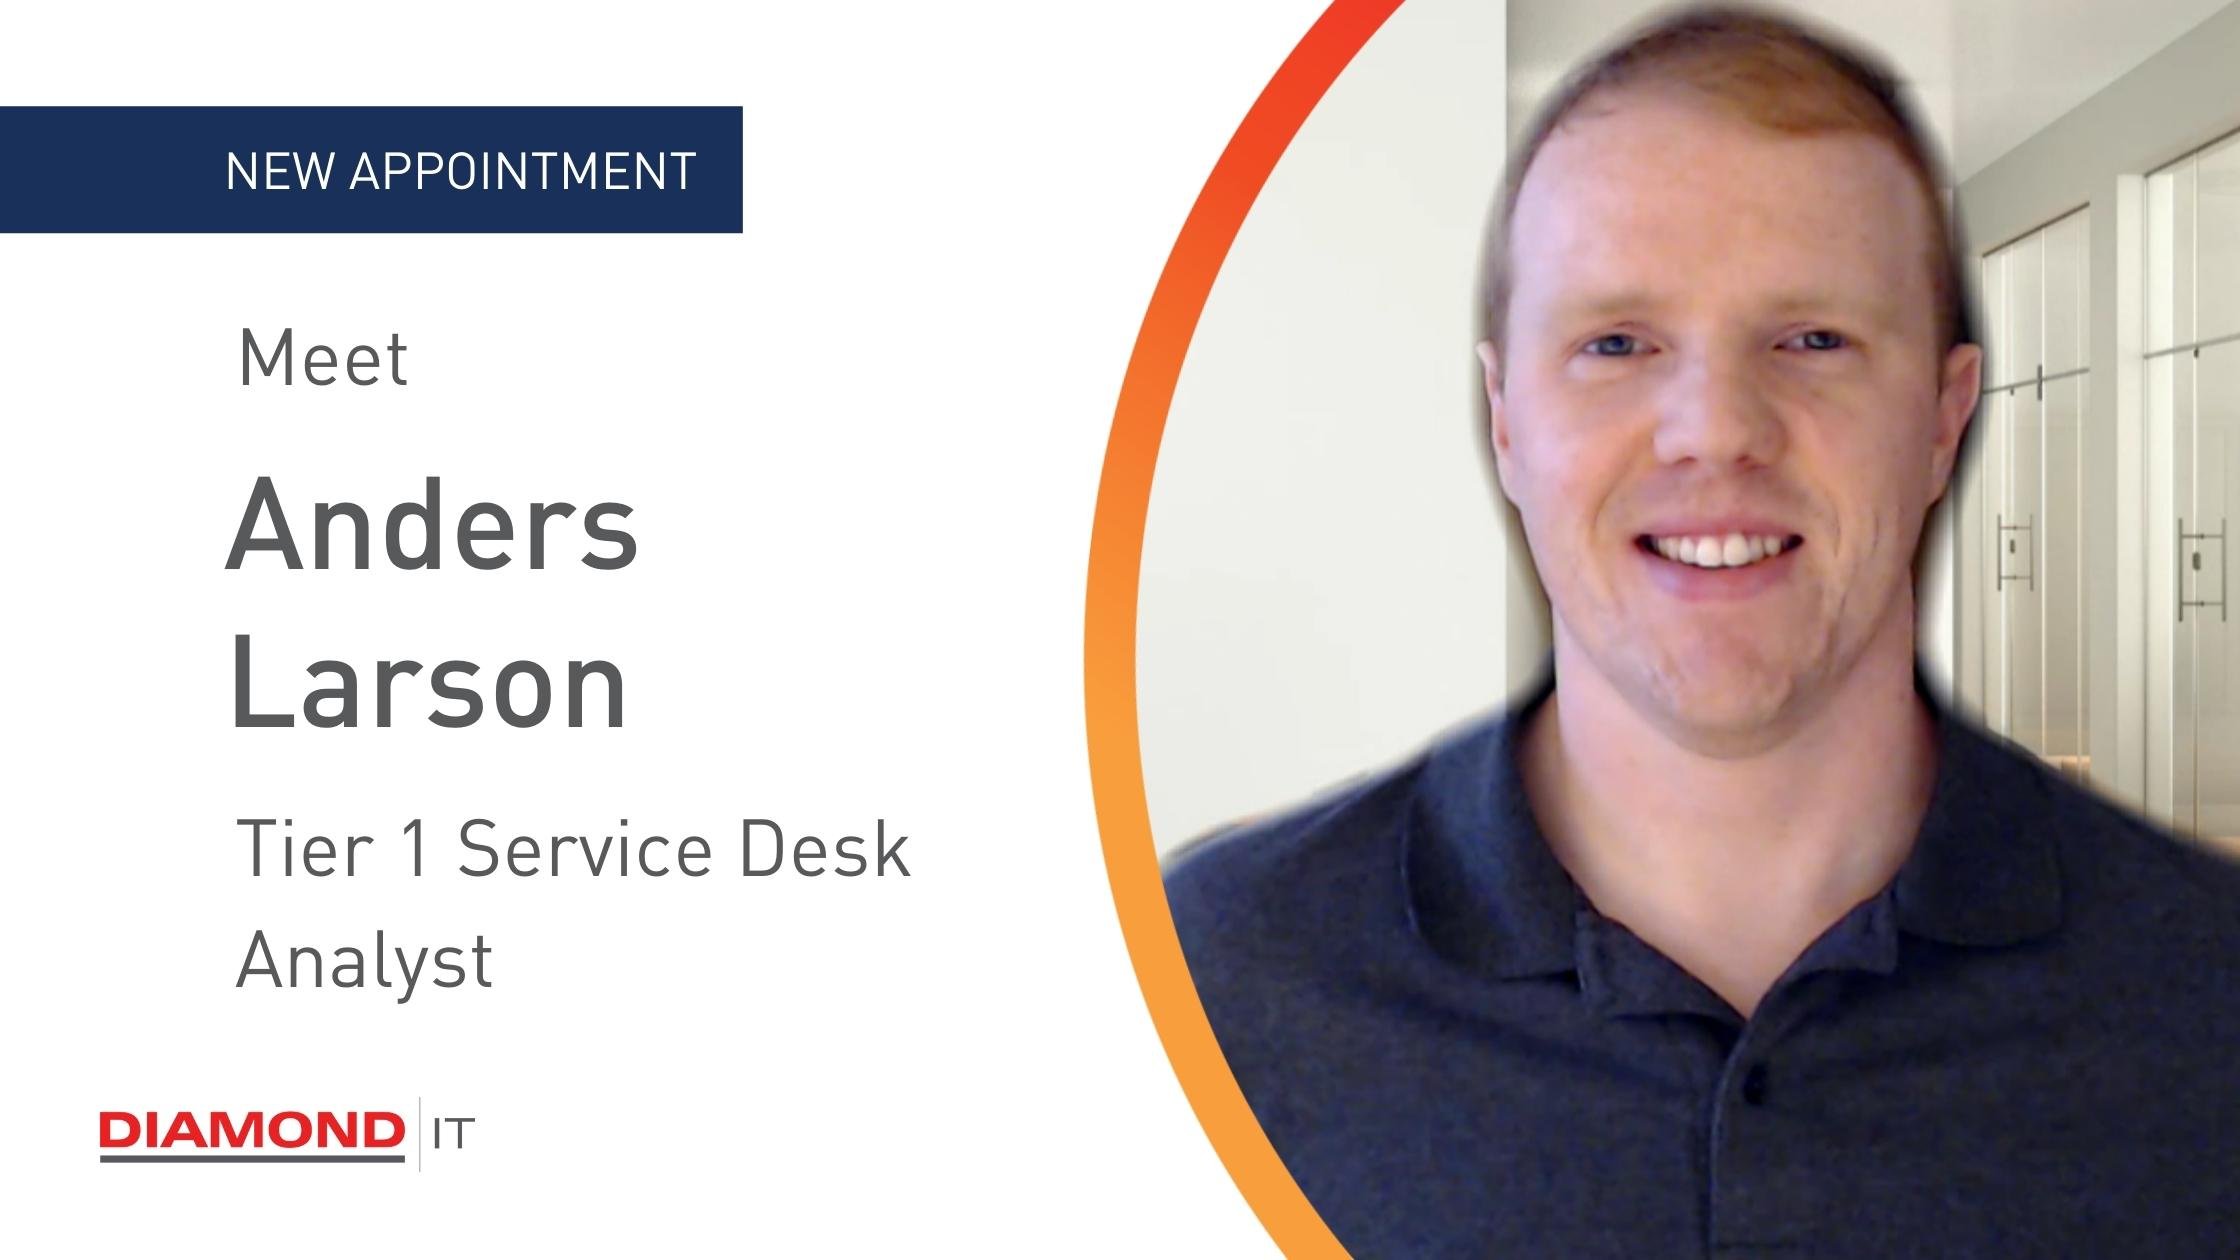 Meet Support Desk Analyst - Anders Larson